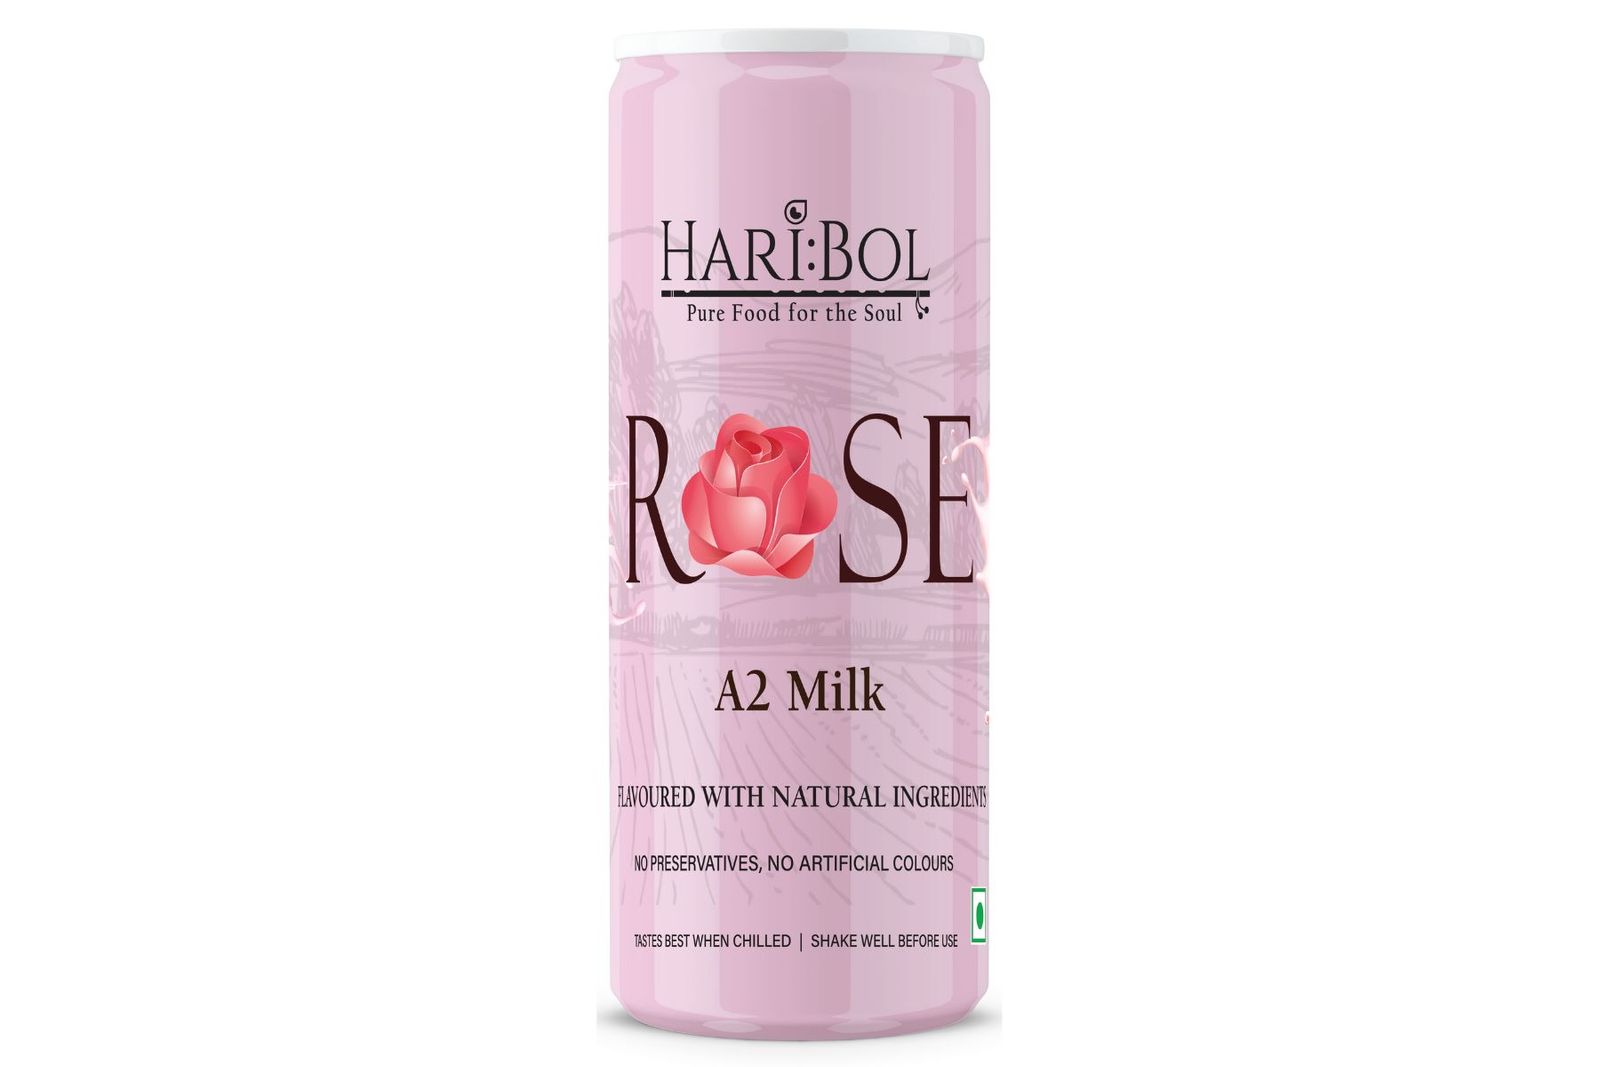 Haribol Rose A2 Milk / हरीबोल रोज़ A2 दूध